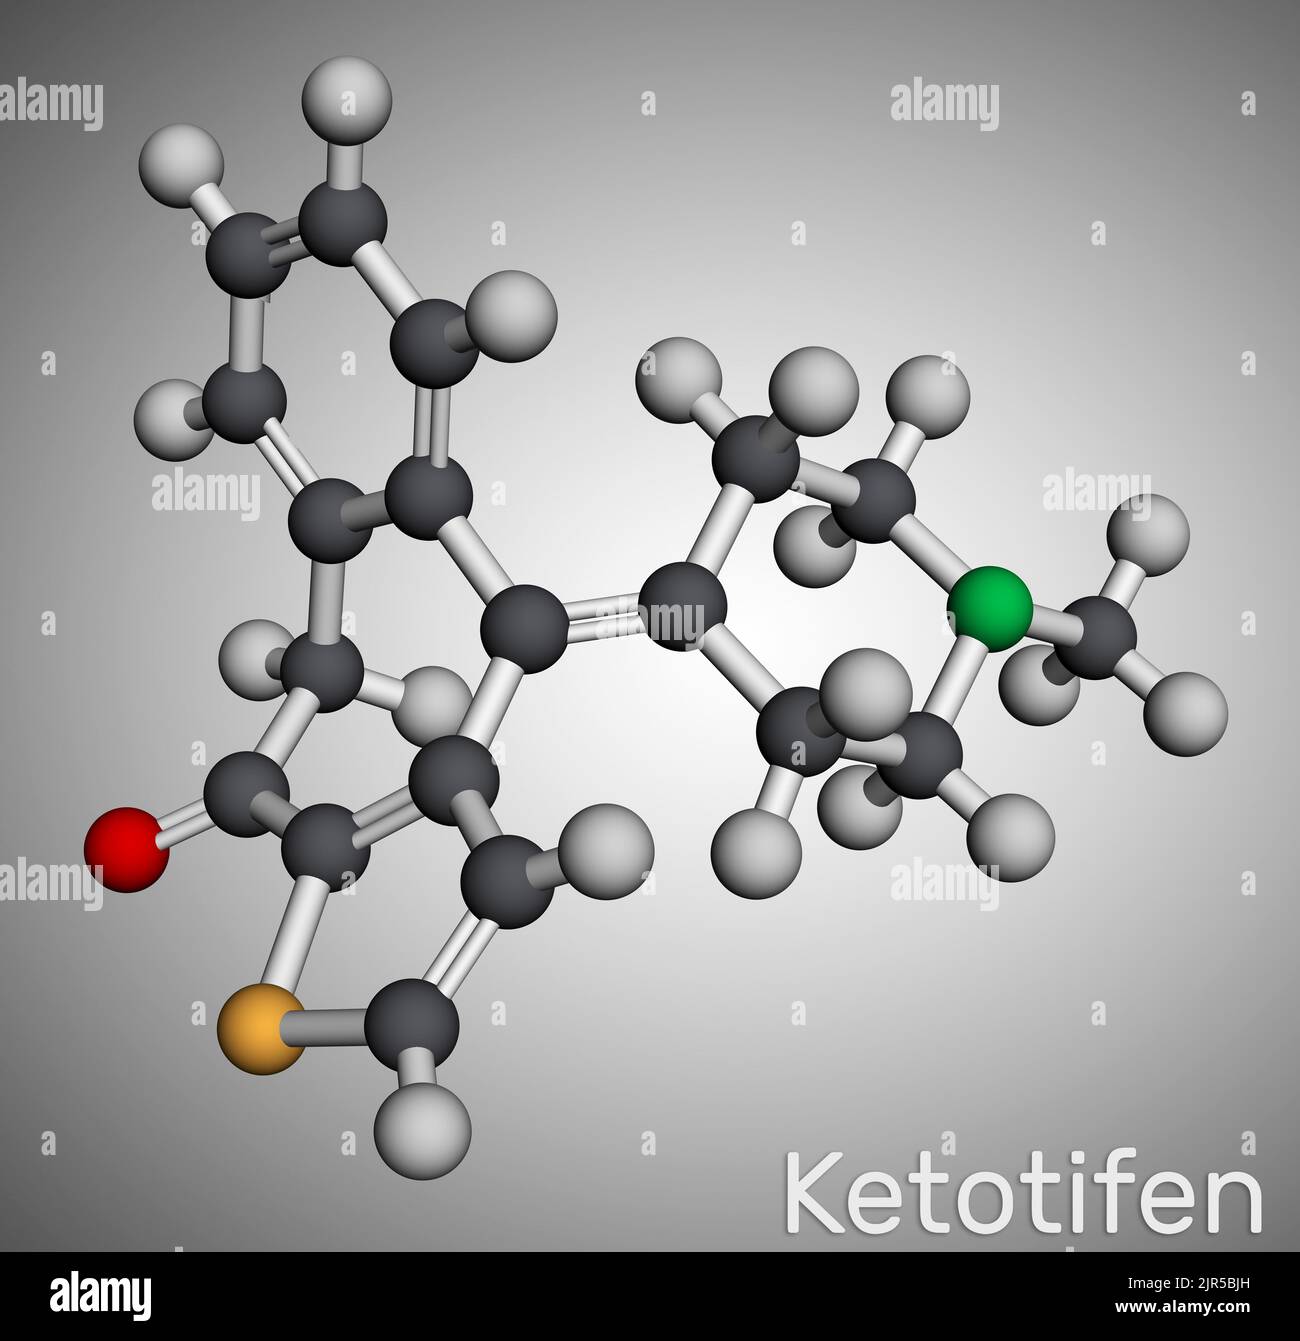 Ketotifen, histamine H1 receptor blocker molecule. It is used to treat atopic asthma, allergic conjunctivitis. Molecular model. 3D rendering. Illustra Stock Photo